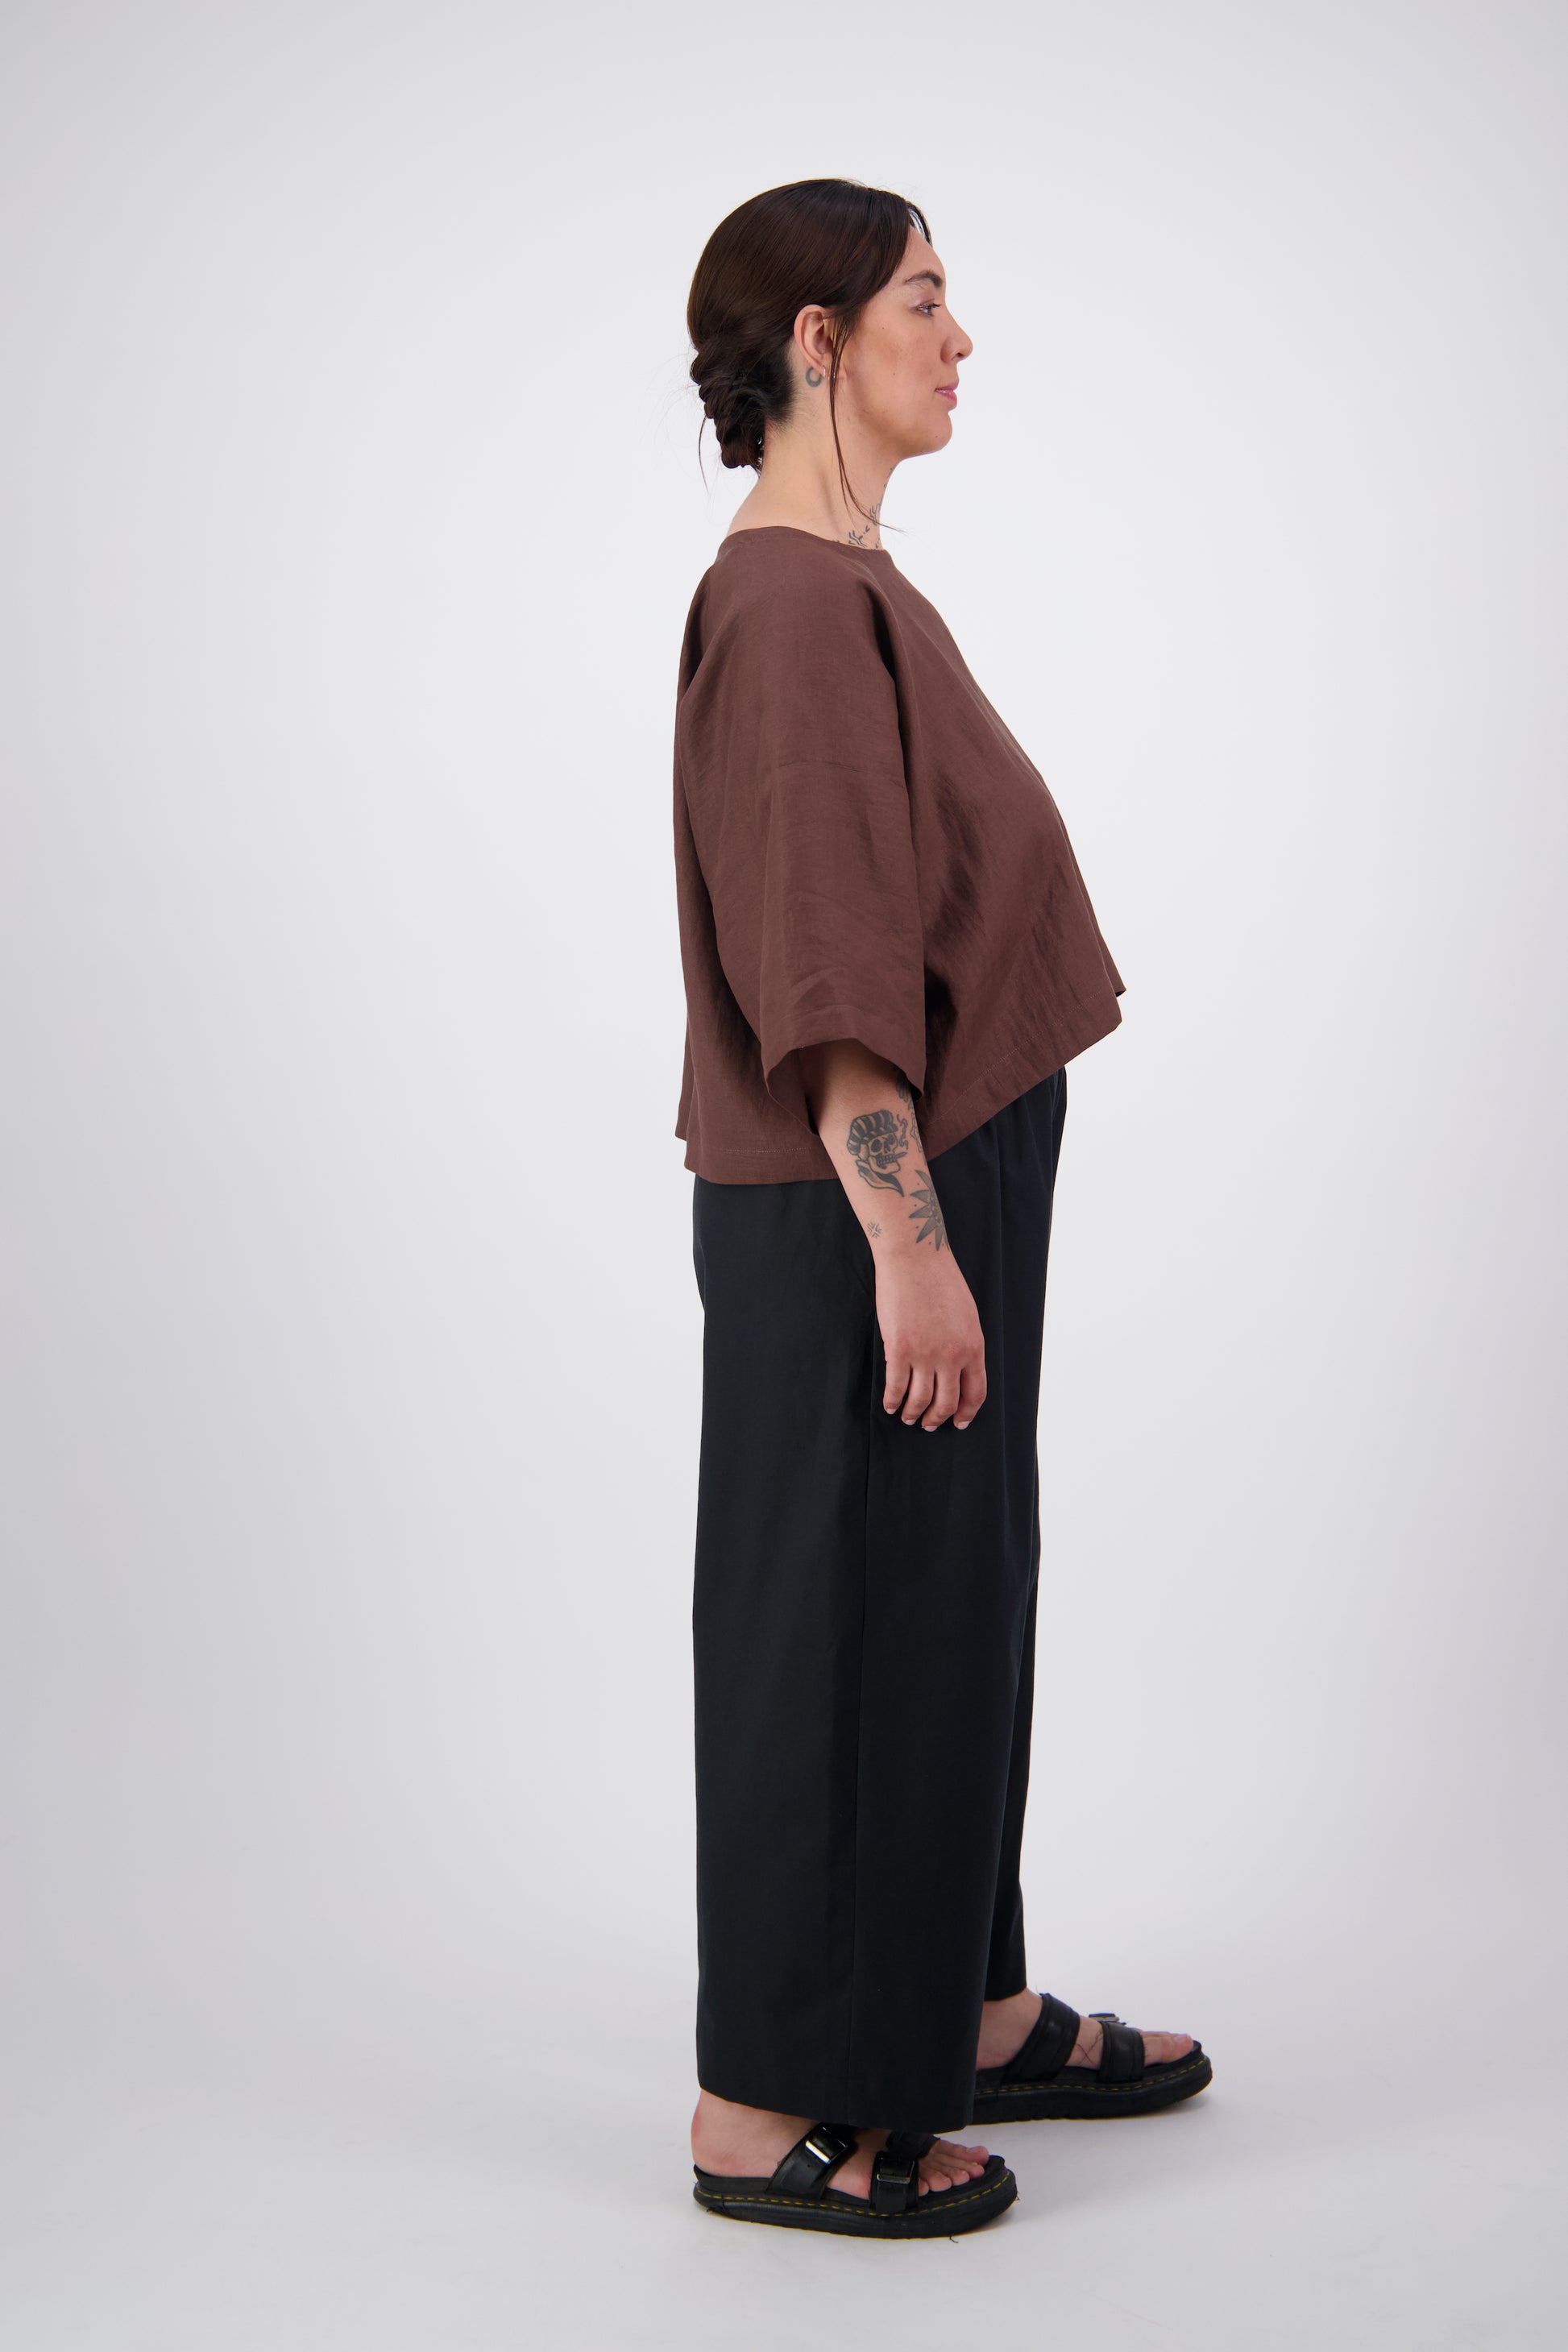 Arlena wearing black twill pants with a brown linen crop tee top